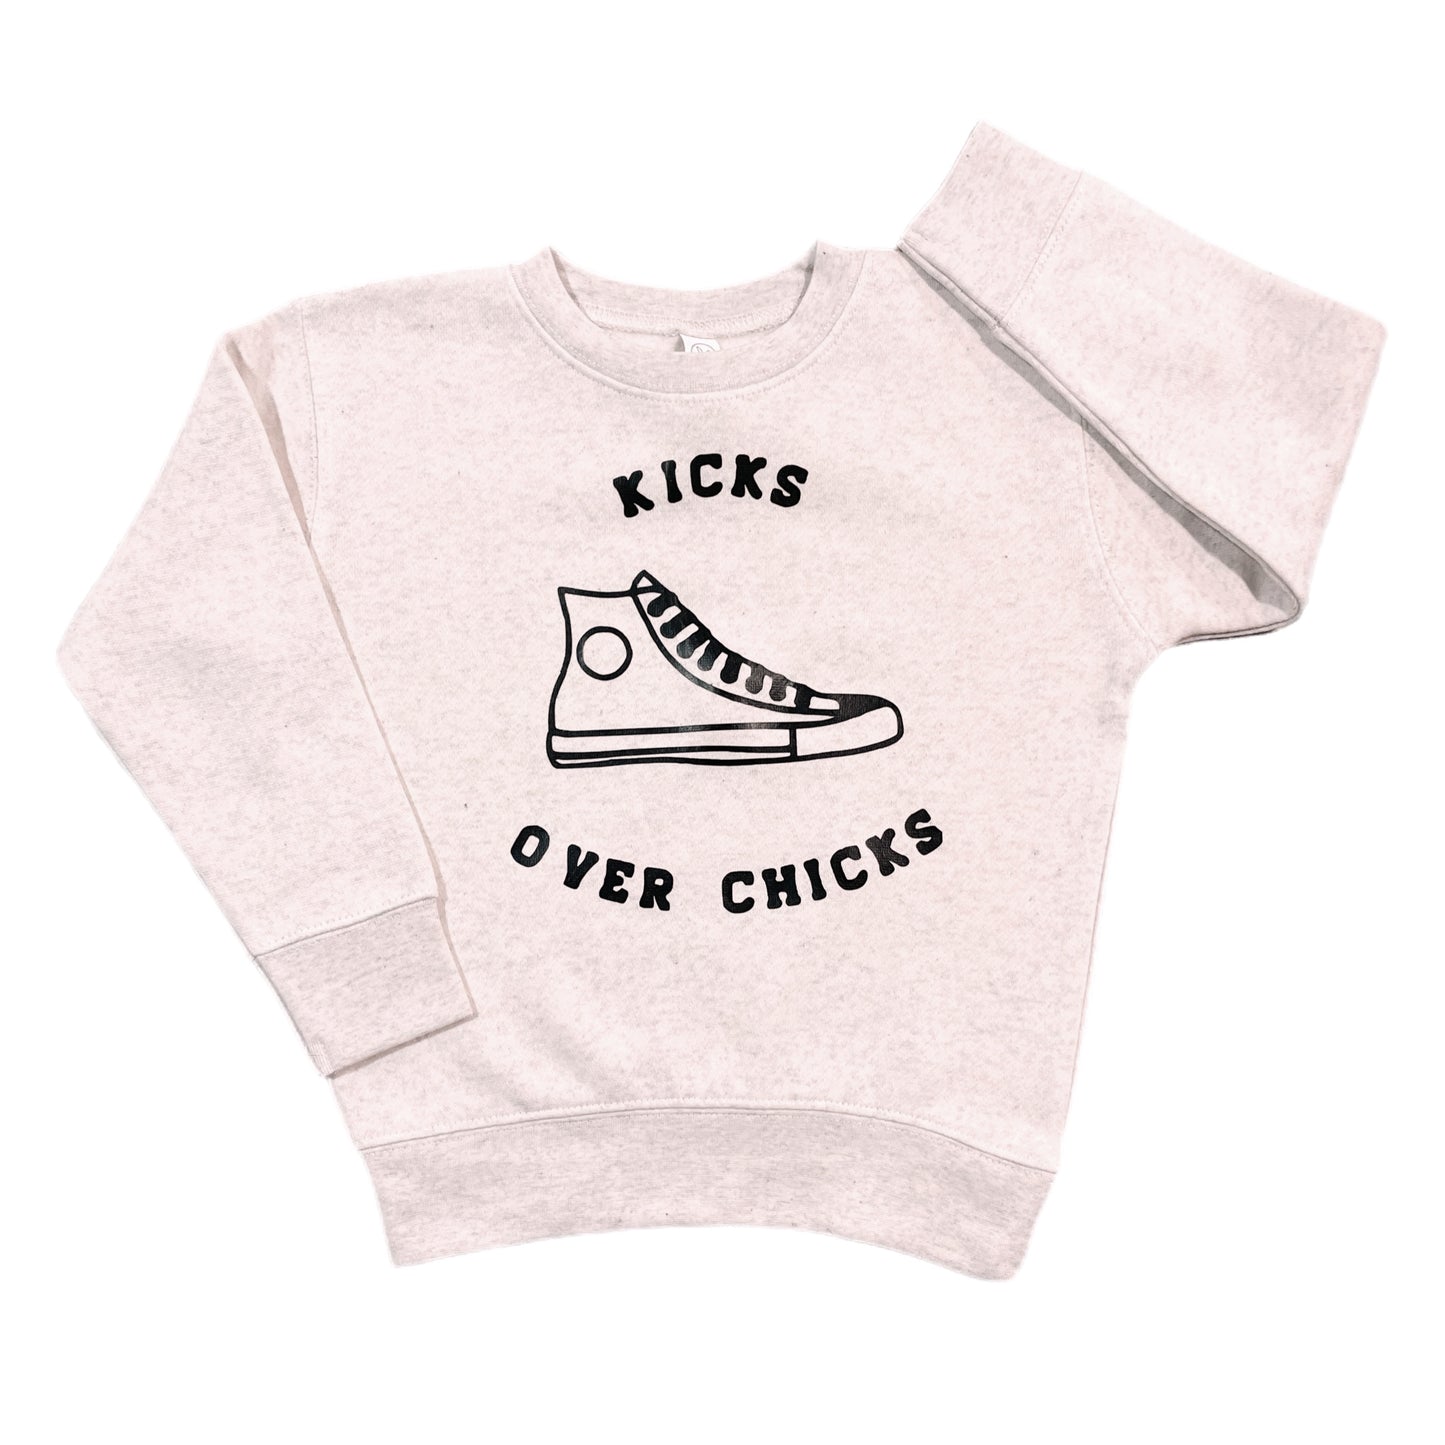 Kicks Over Chicks Sweatshirt